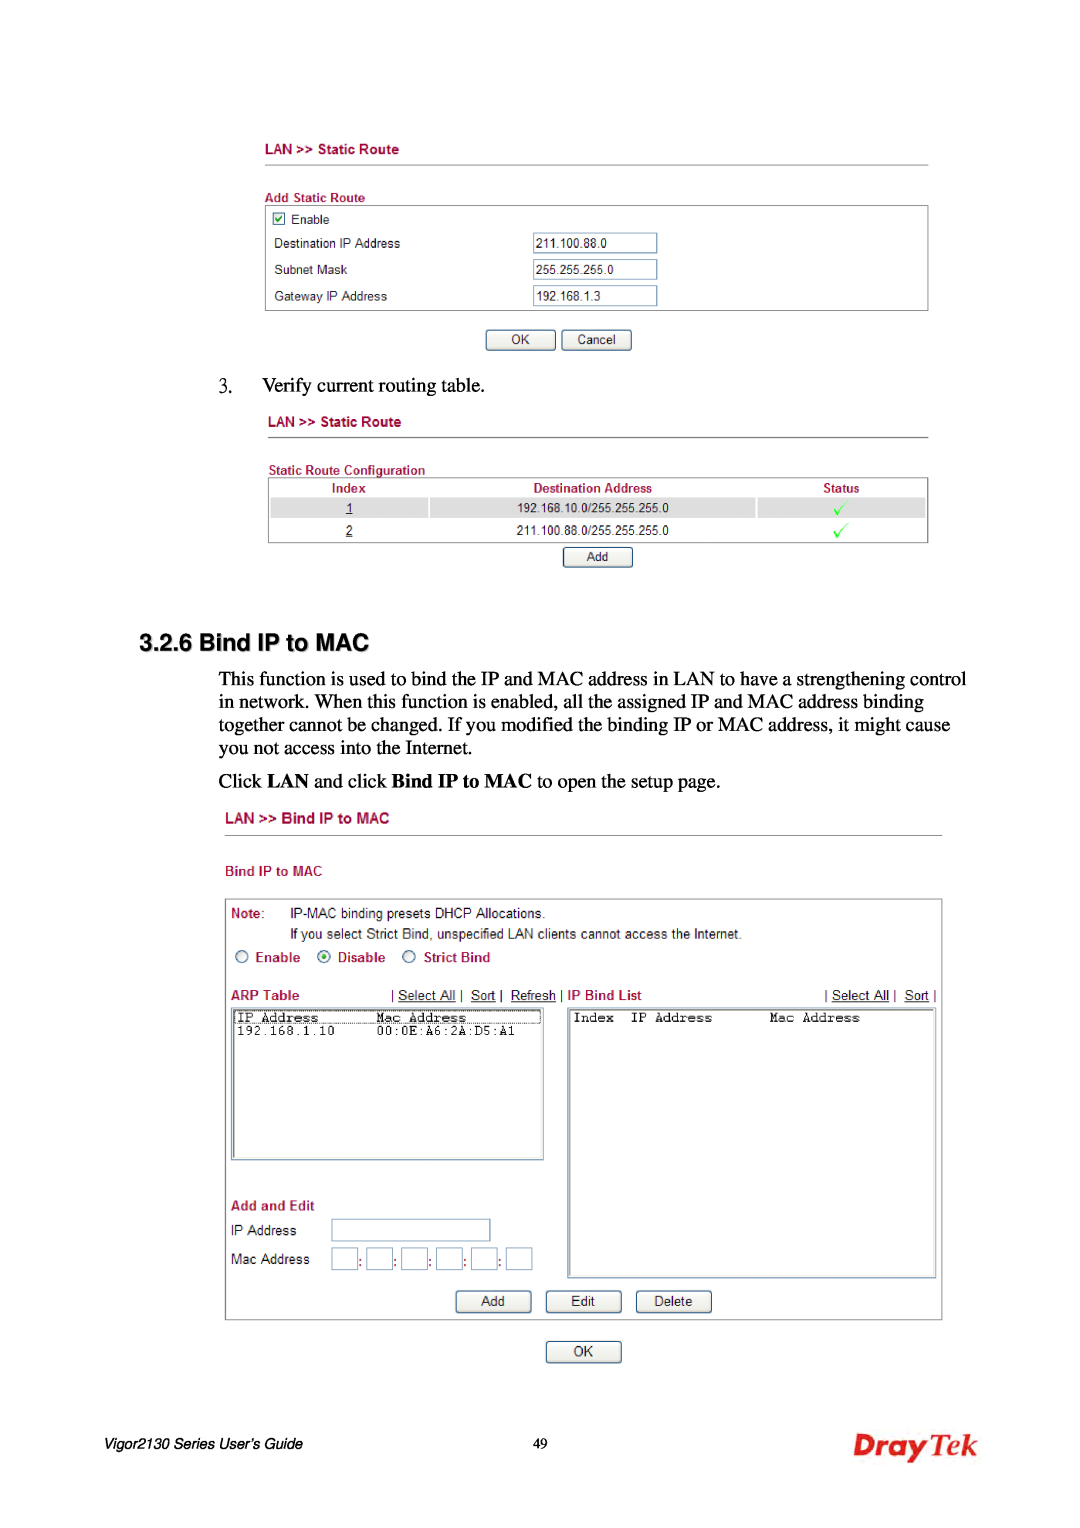 Draytek 2130 manual Bind IP to MAC 